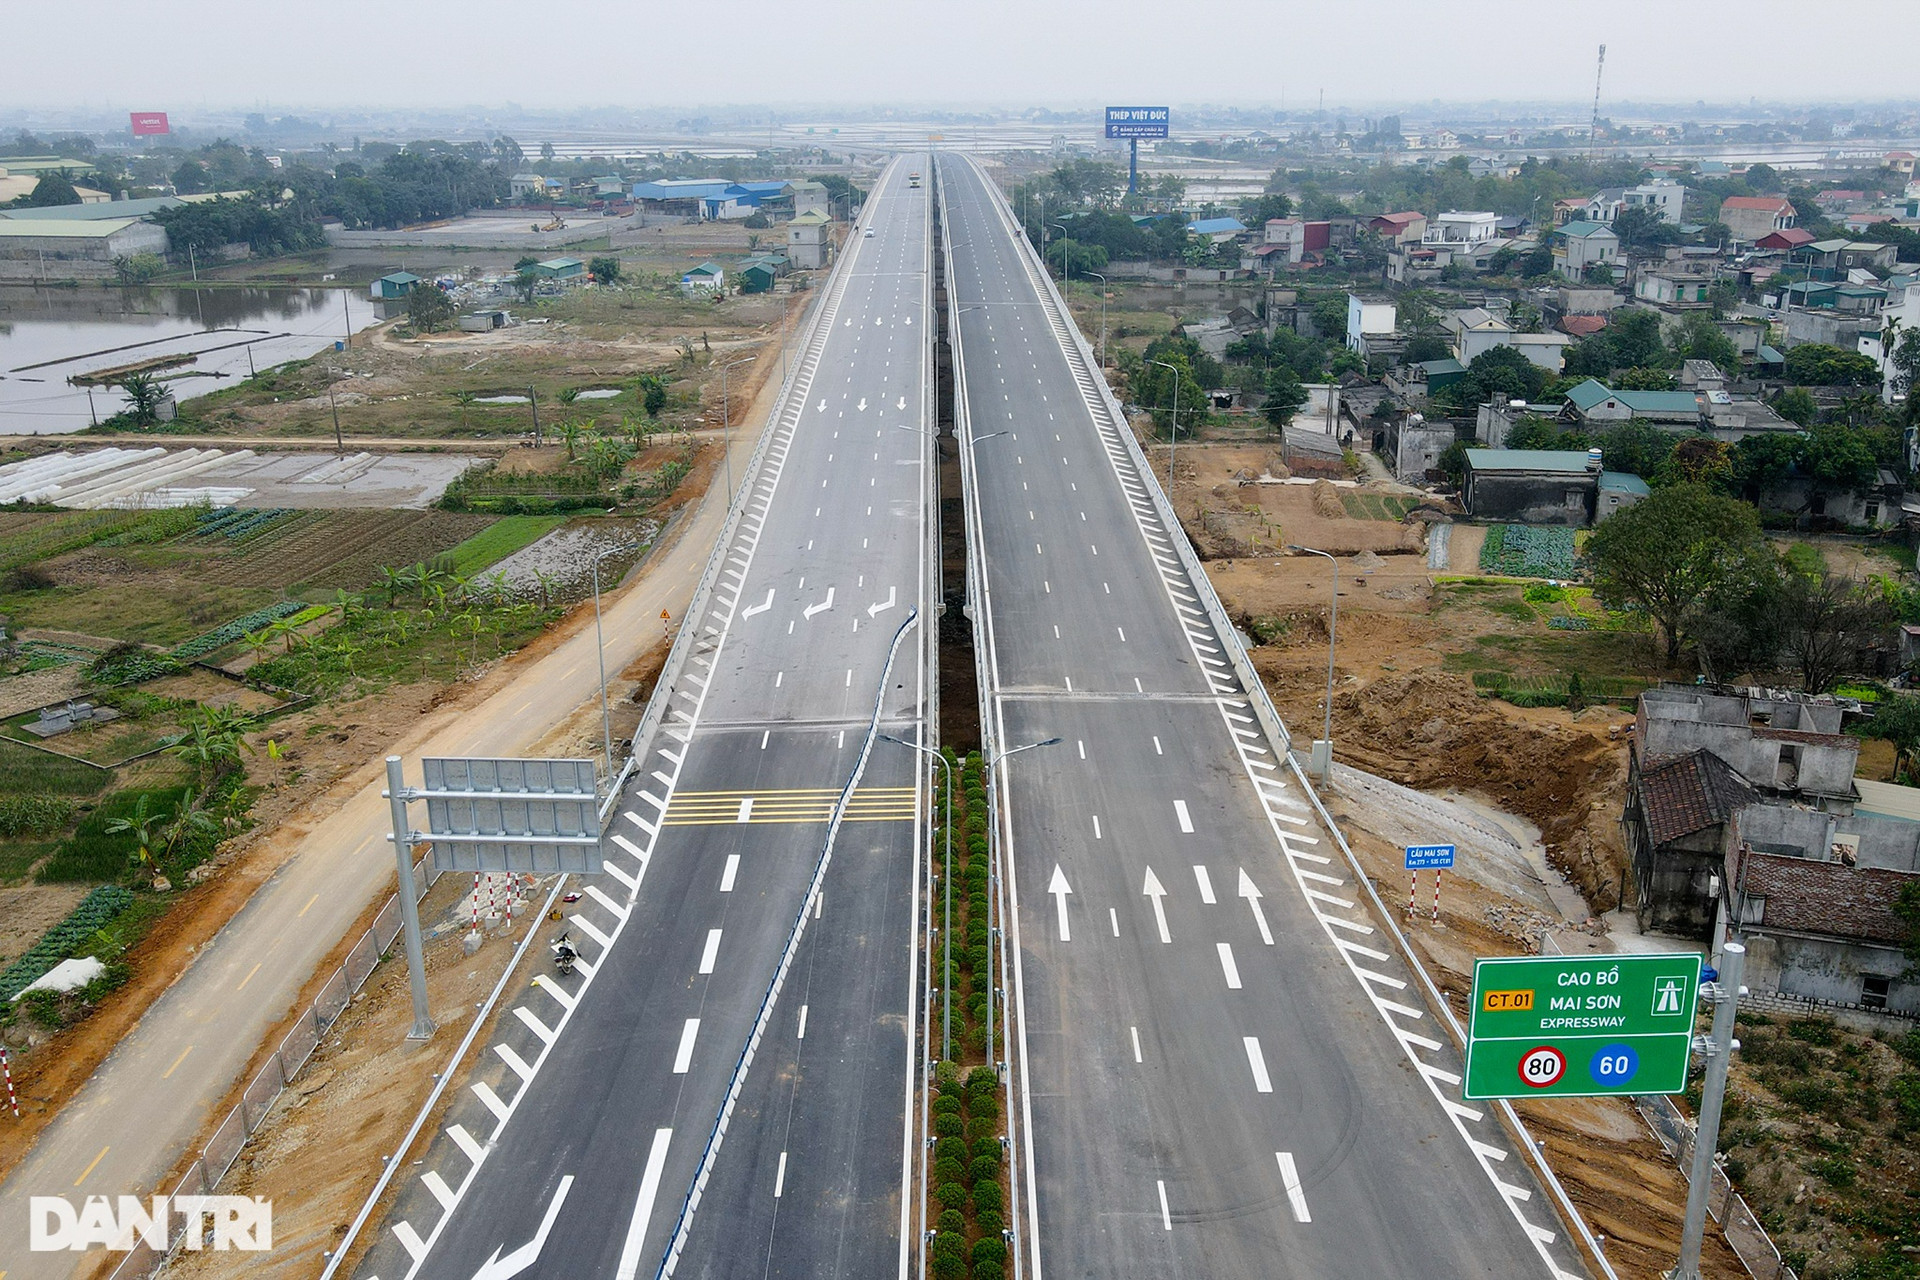 Bất ngờ hoãn thông xe cao tốc Cao Bồ - Mai Sơn  - 1